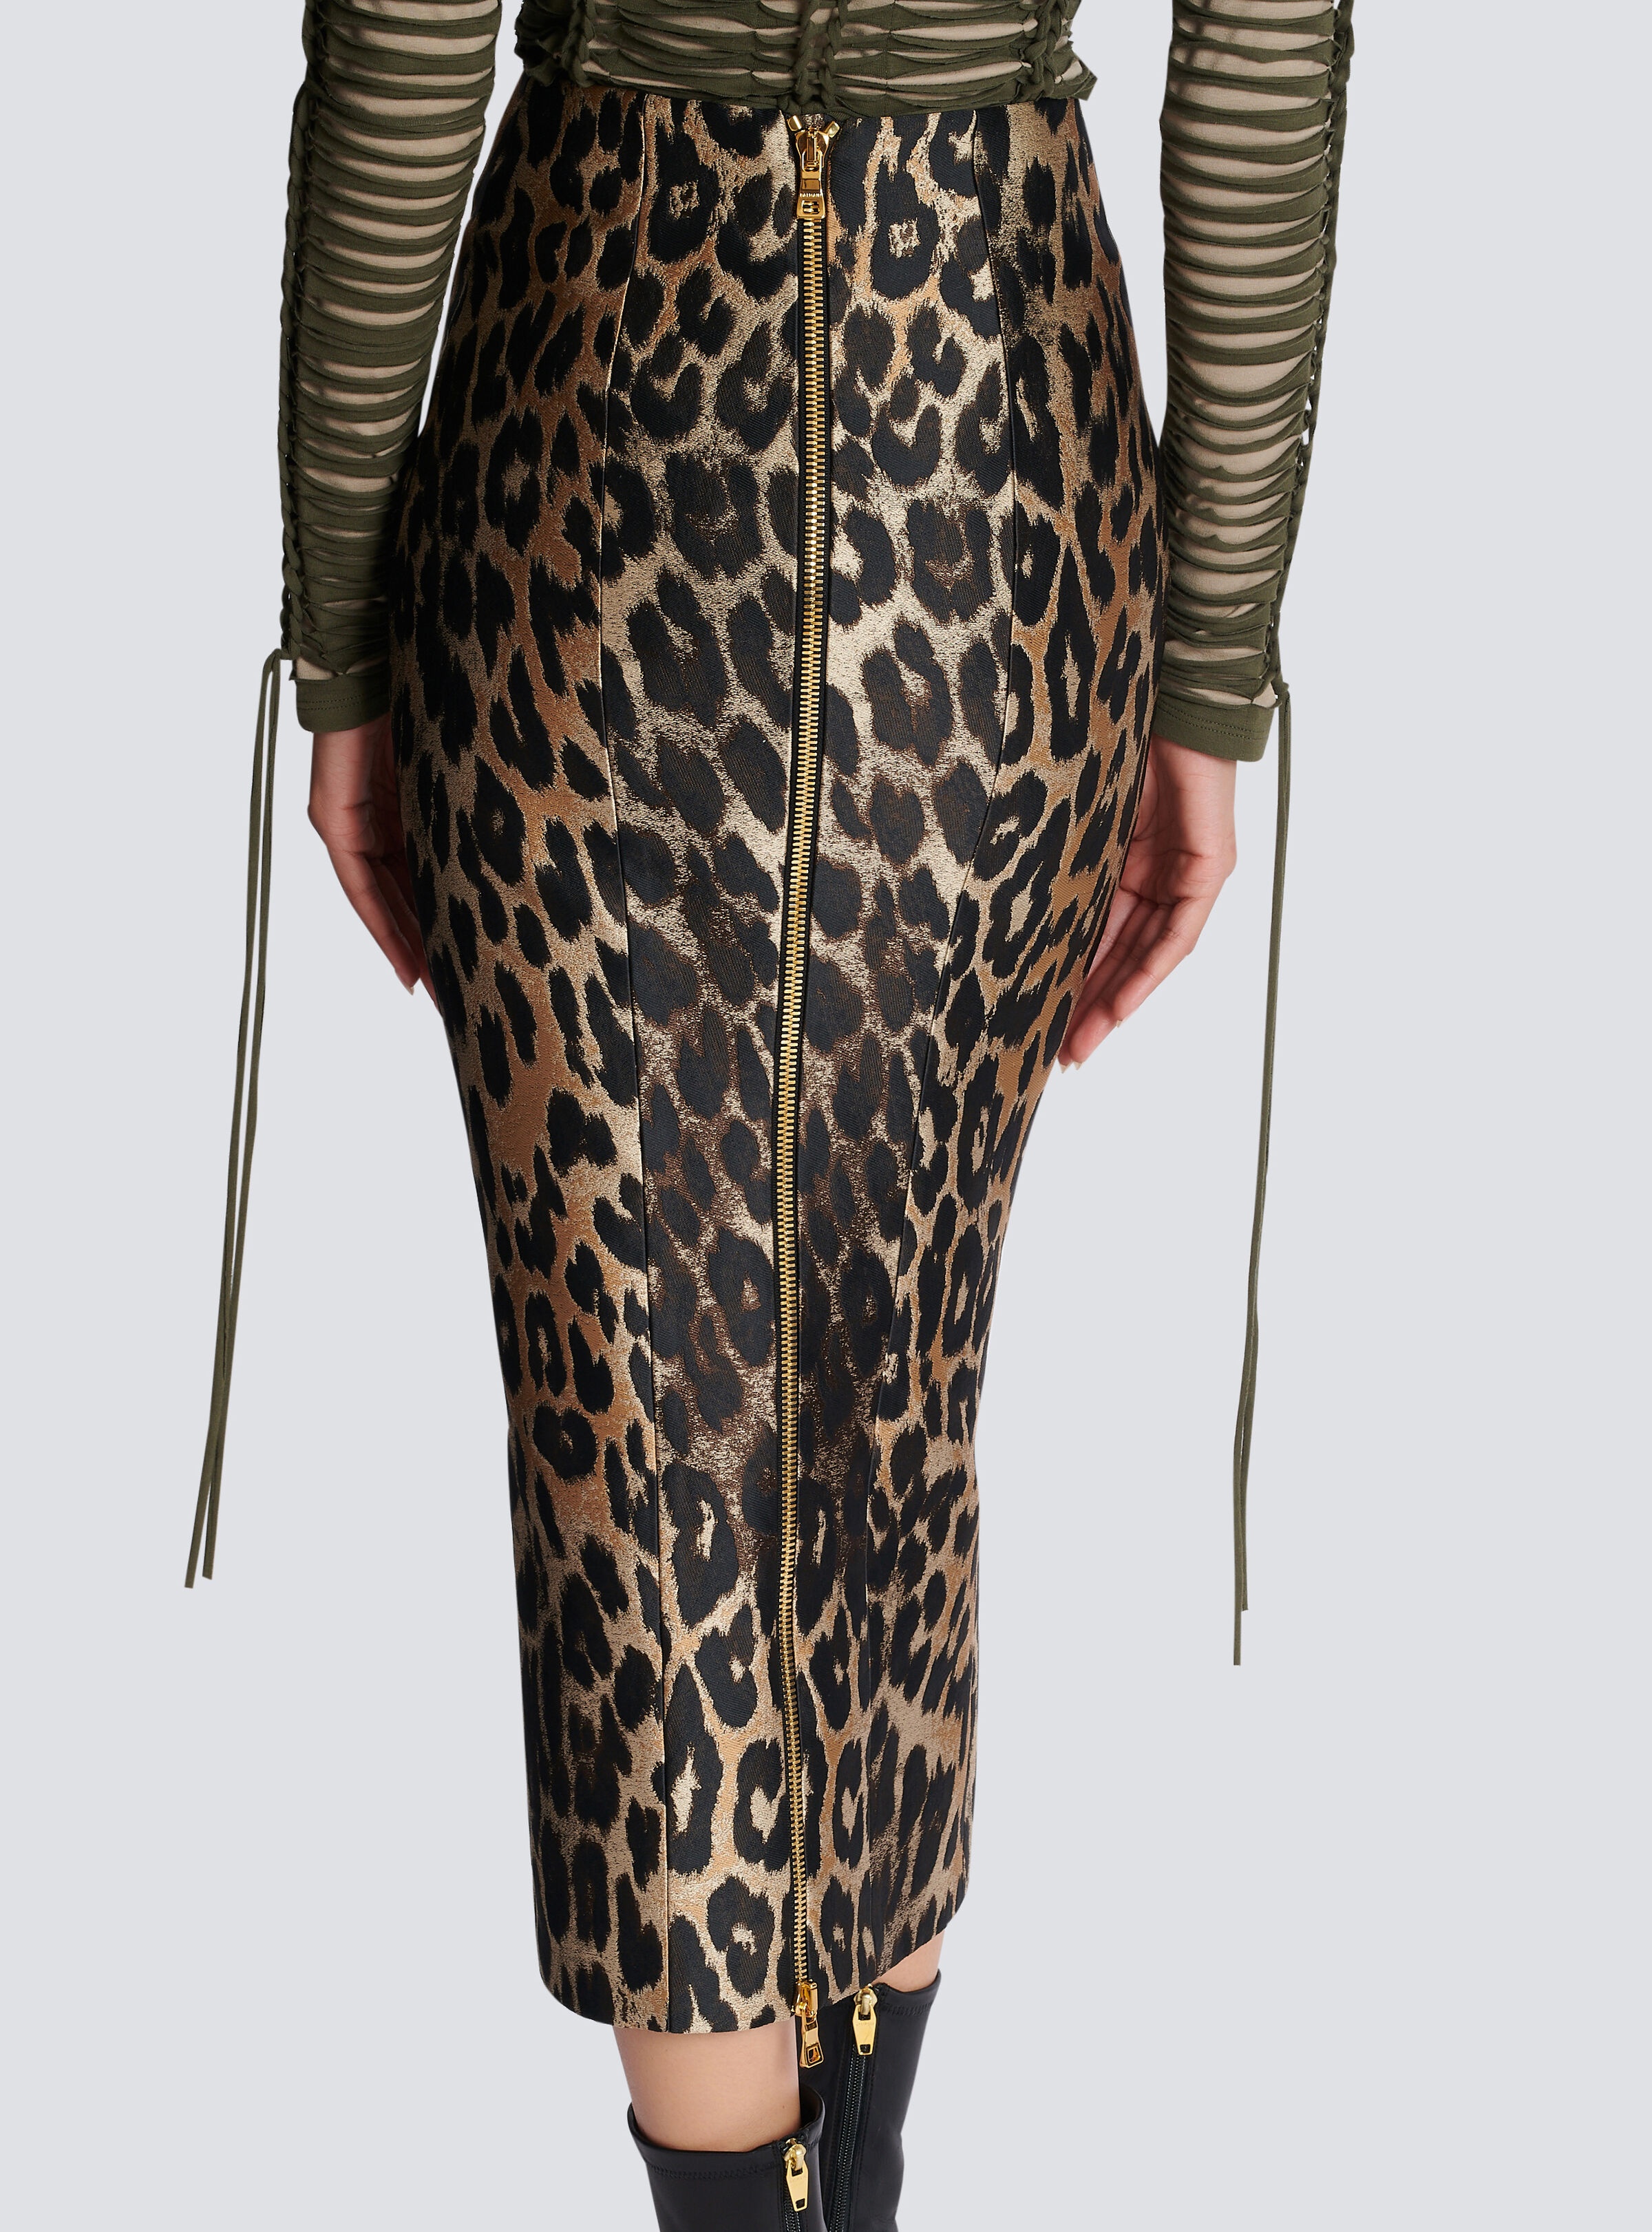 Leopard jacquard pencil skirt - 6